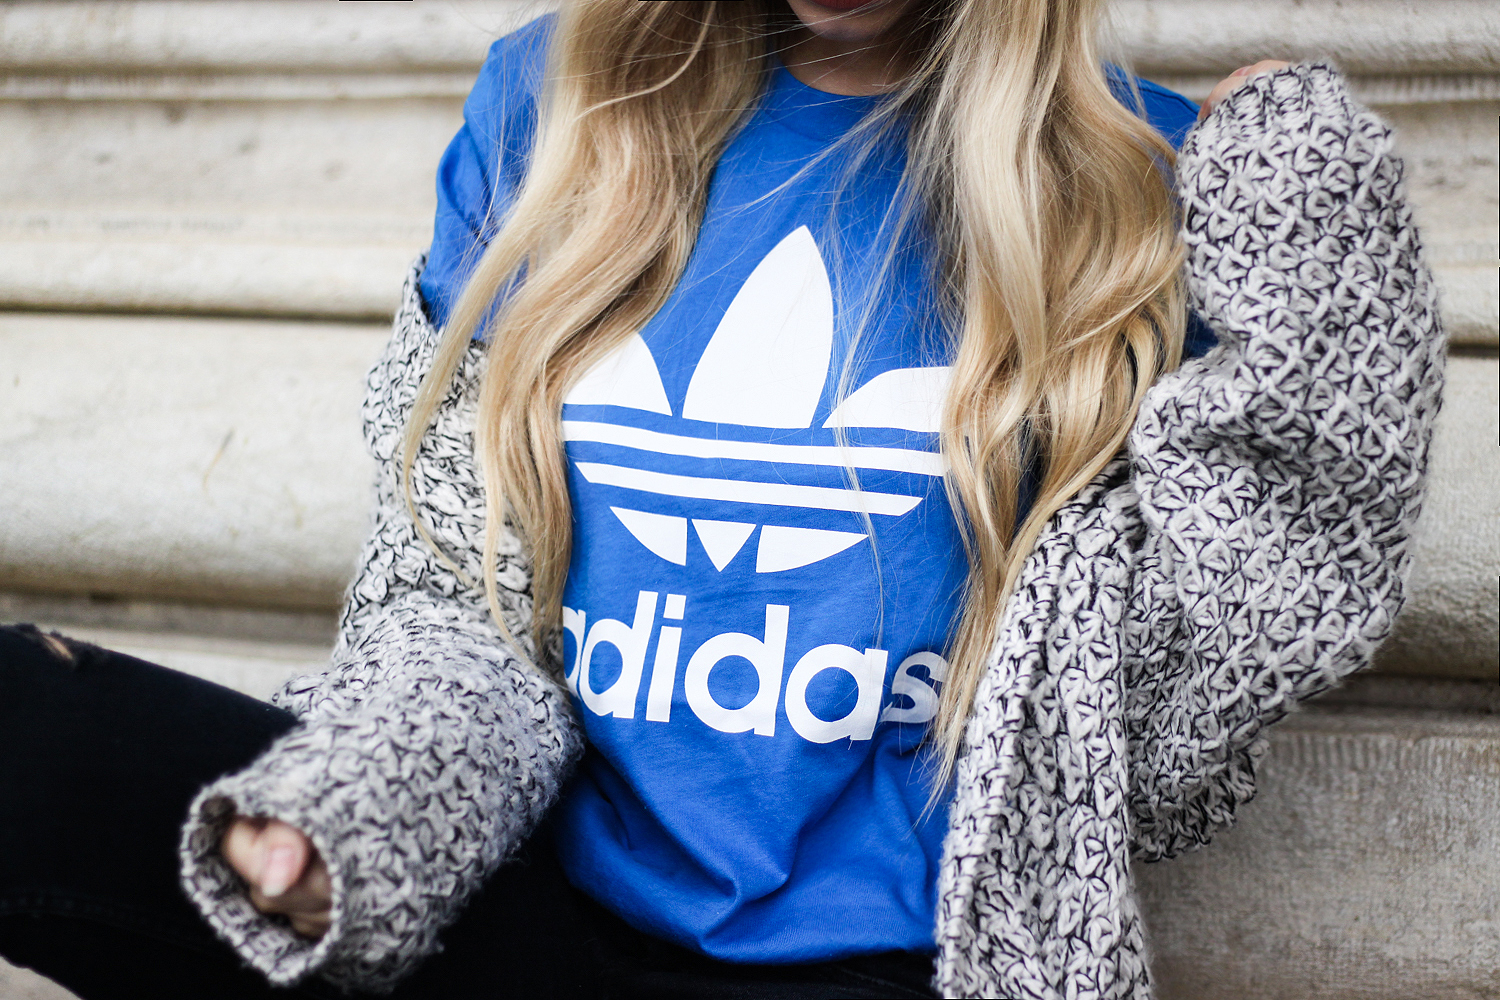 franziska-elea-deutsche-blogger-adidas-outfit-stan-smith-sneaker-weiss-t-shirt-kombinieren-boyfriend-shirt-in-blau-altes-adidas-logo_